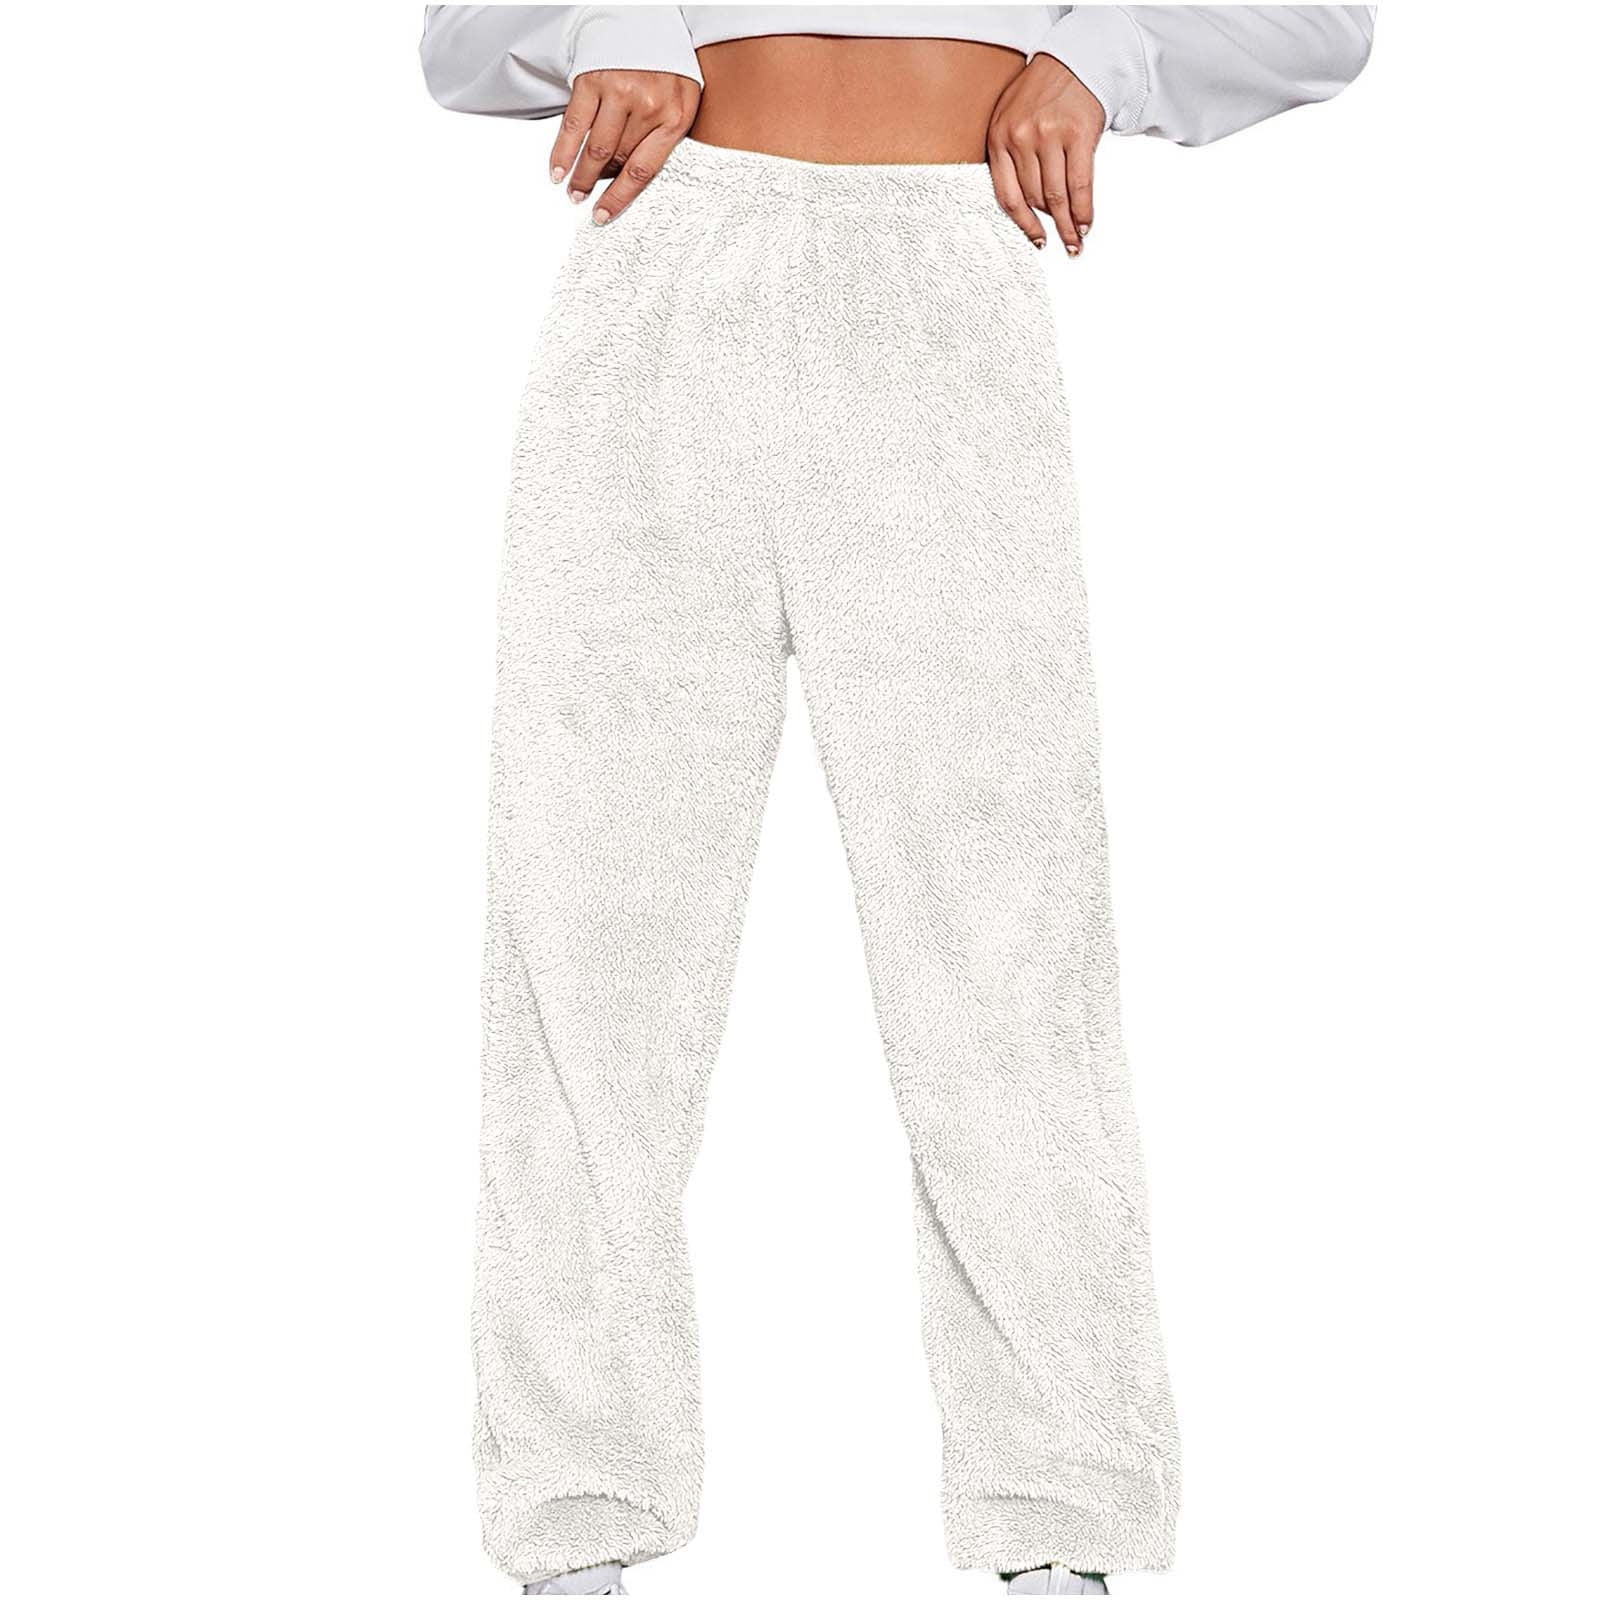 CTEEGC Womens Winter Pajamas Pants Fuzzy Fleece Cozy Wide Leg